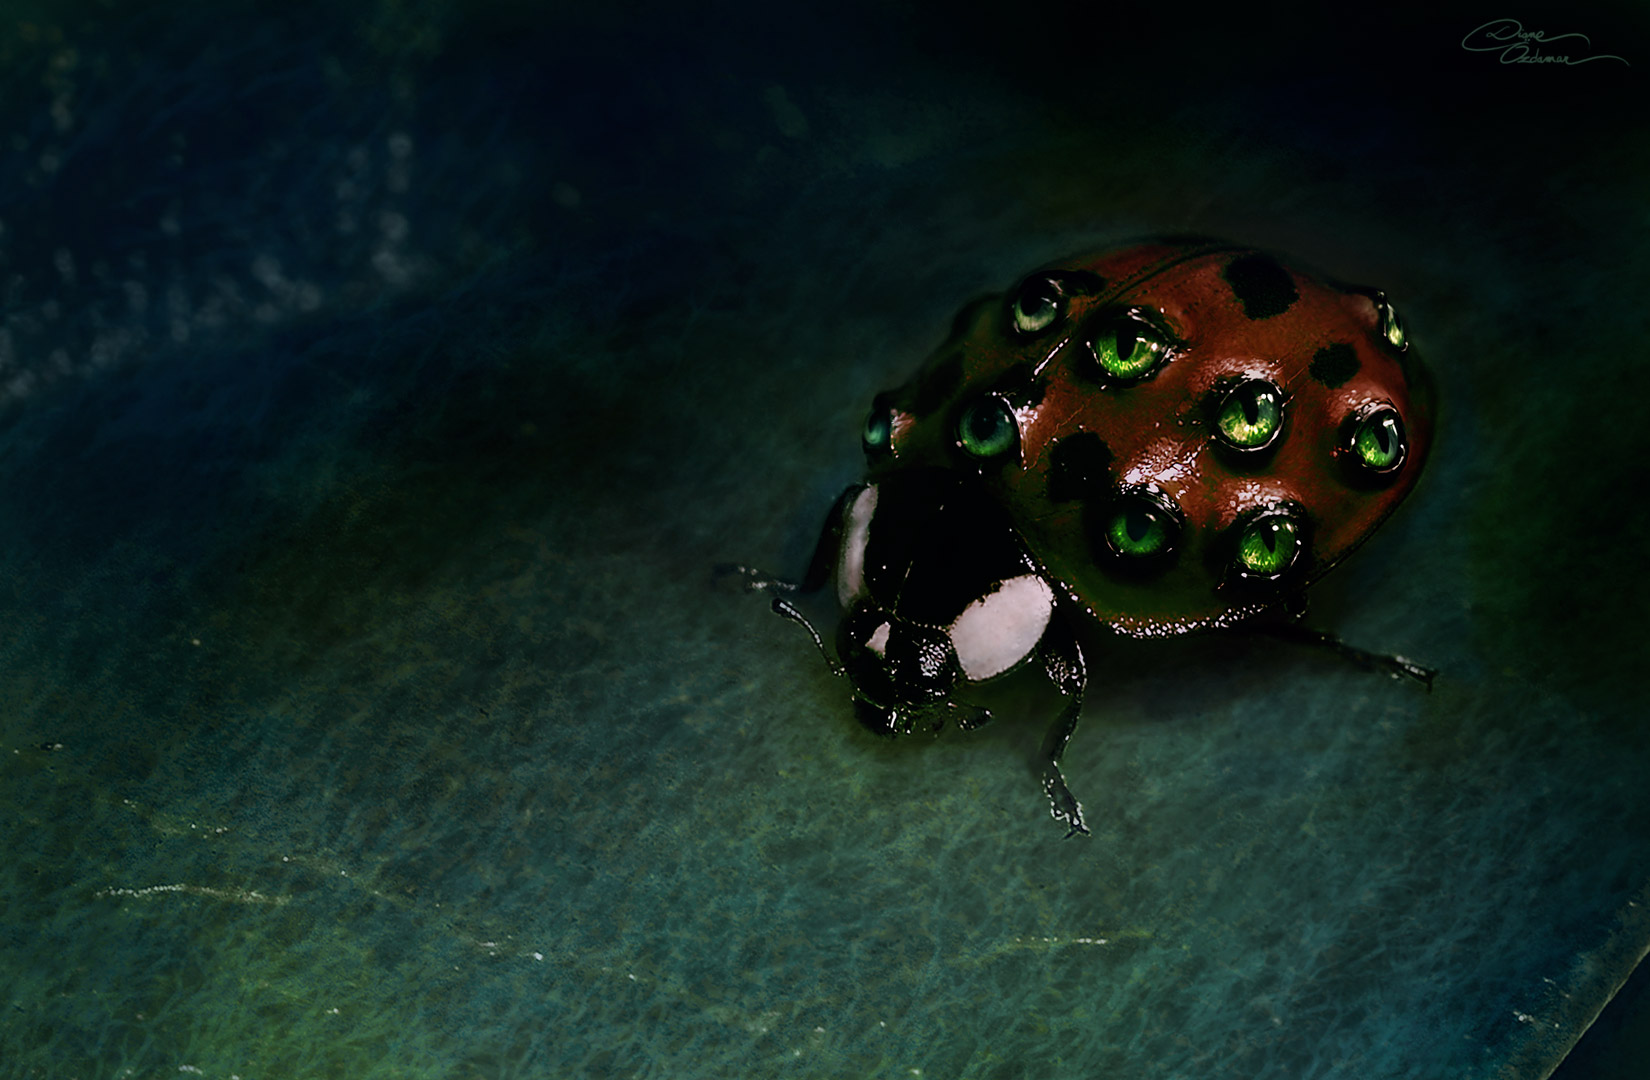 Ladybug Wallpaper And Background Image Id